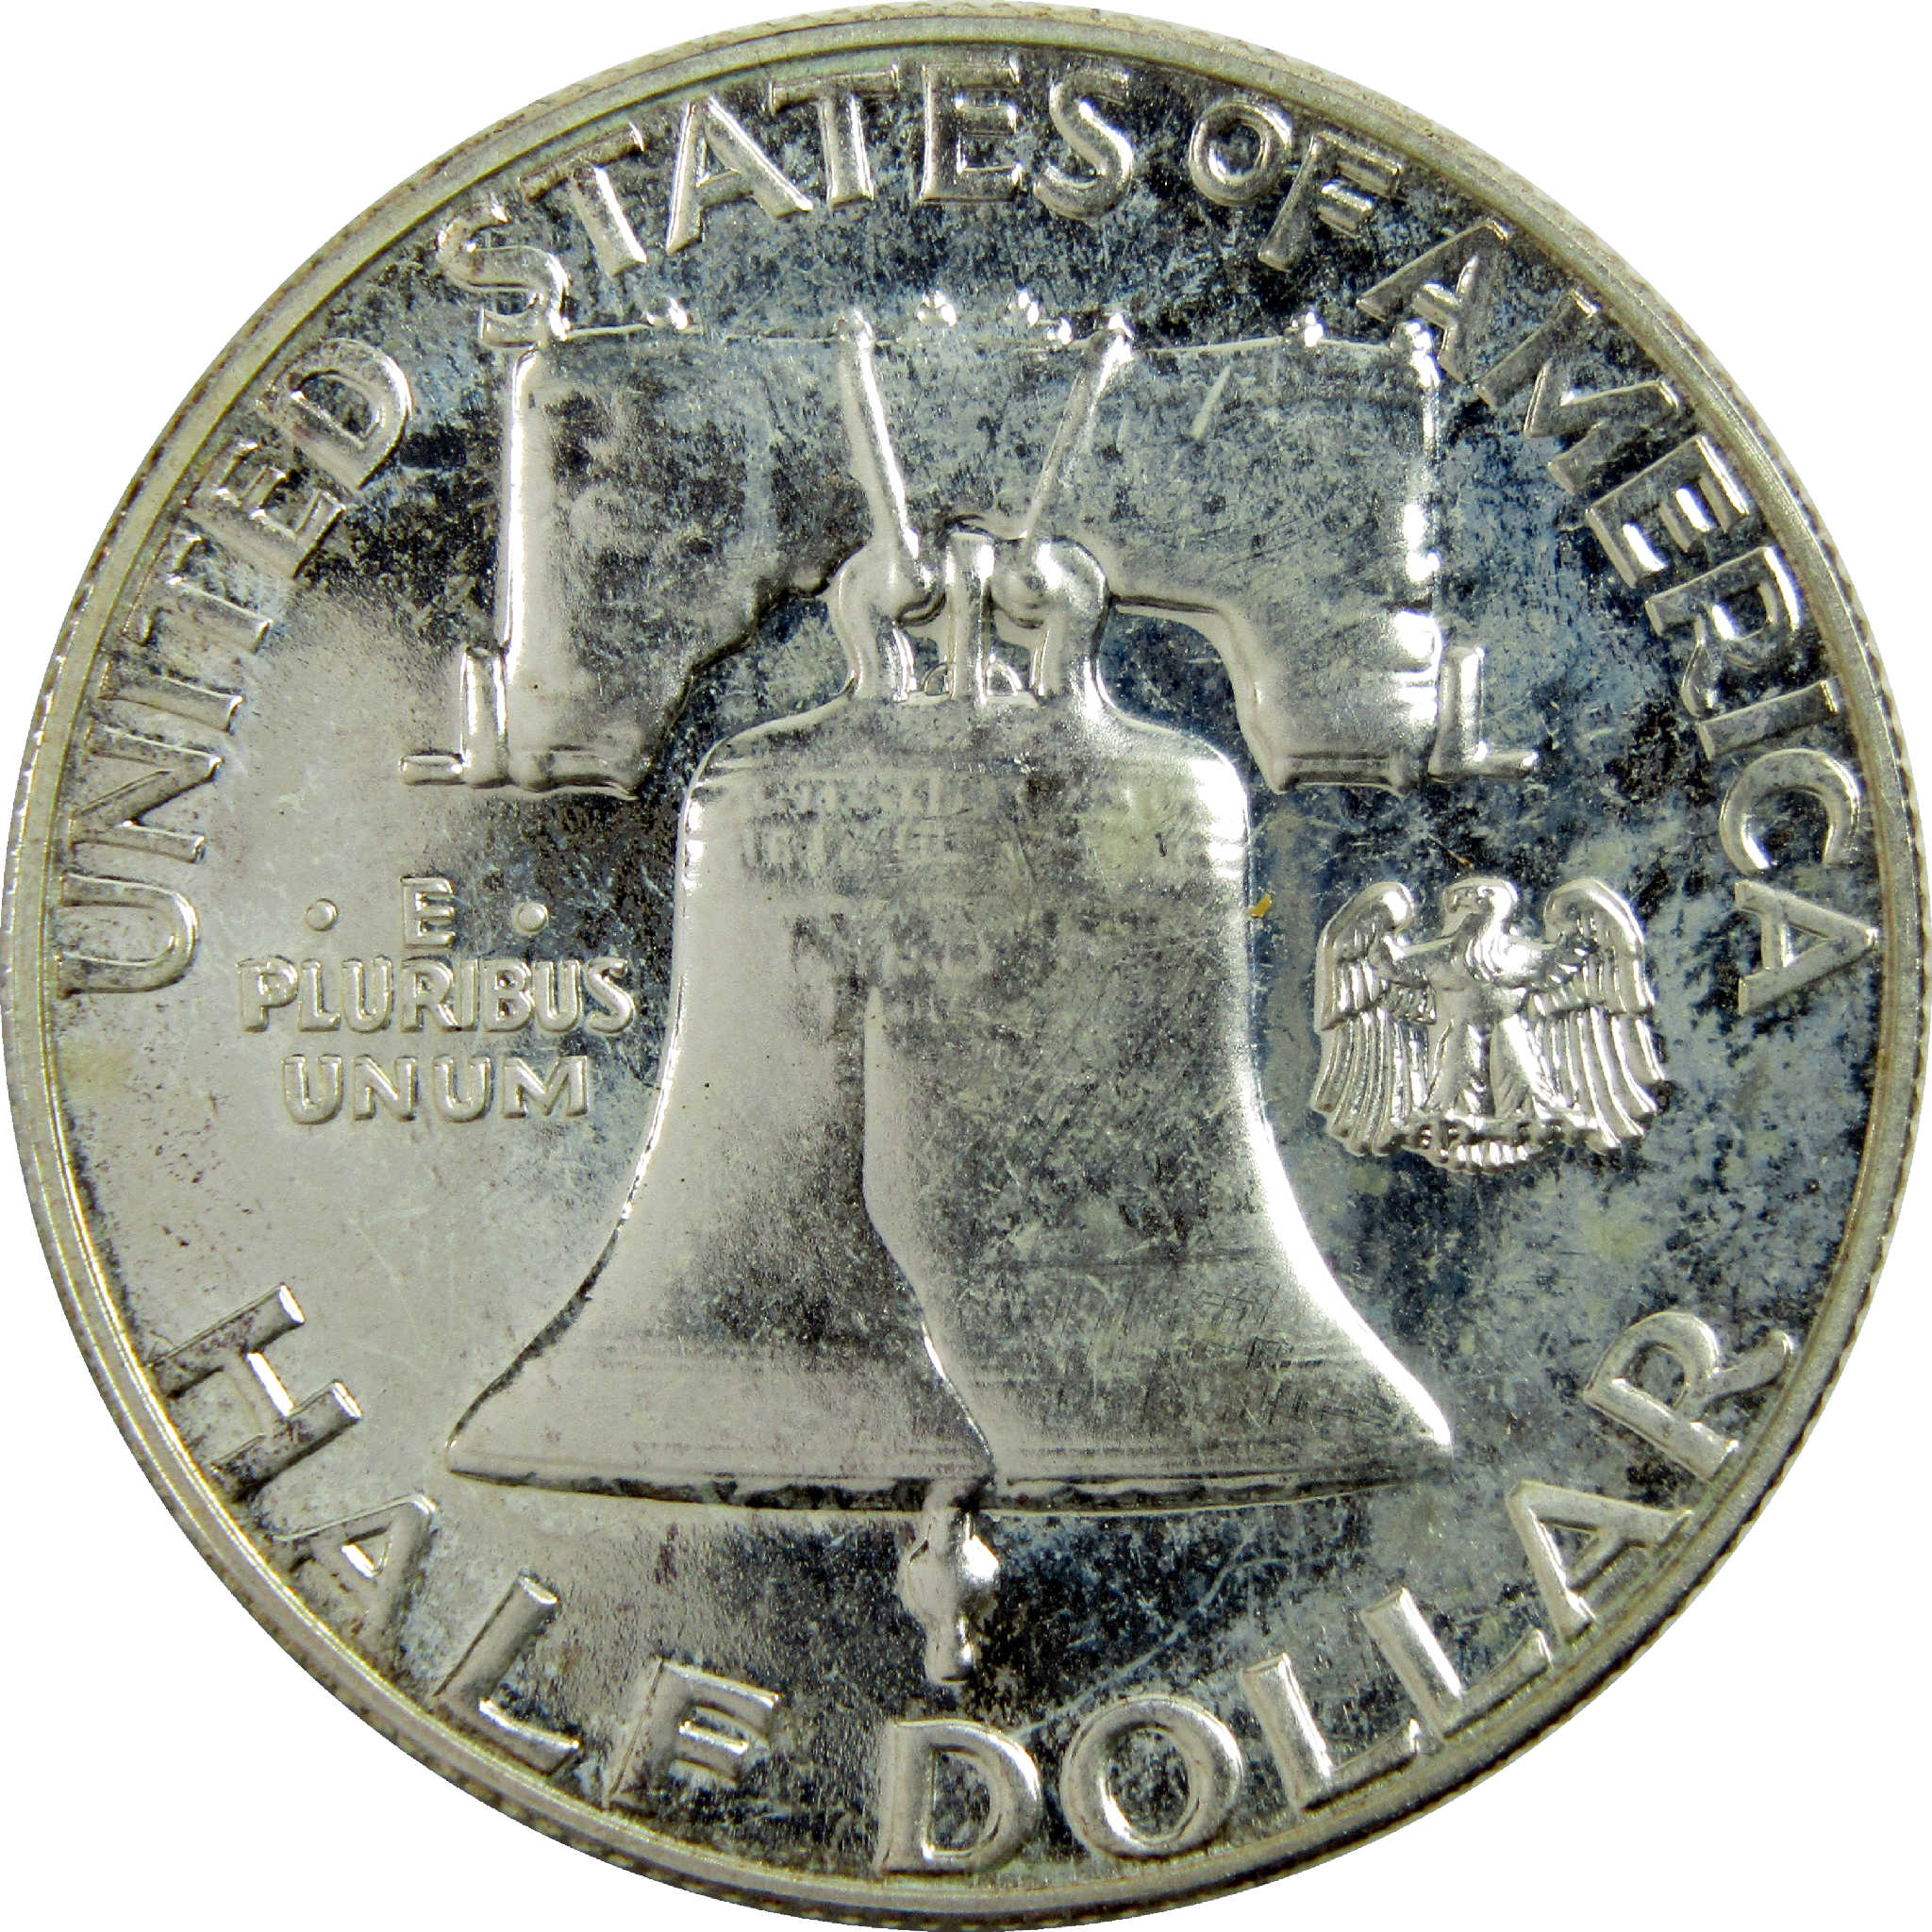 1962 Franklin Half Dollar Silver 50c Proof Coin SKU:I12315